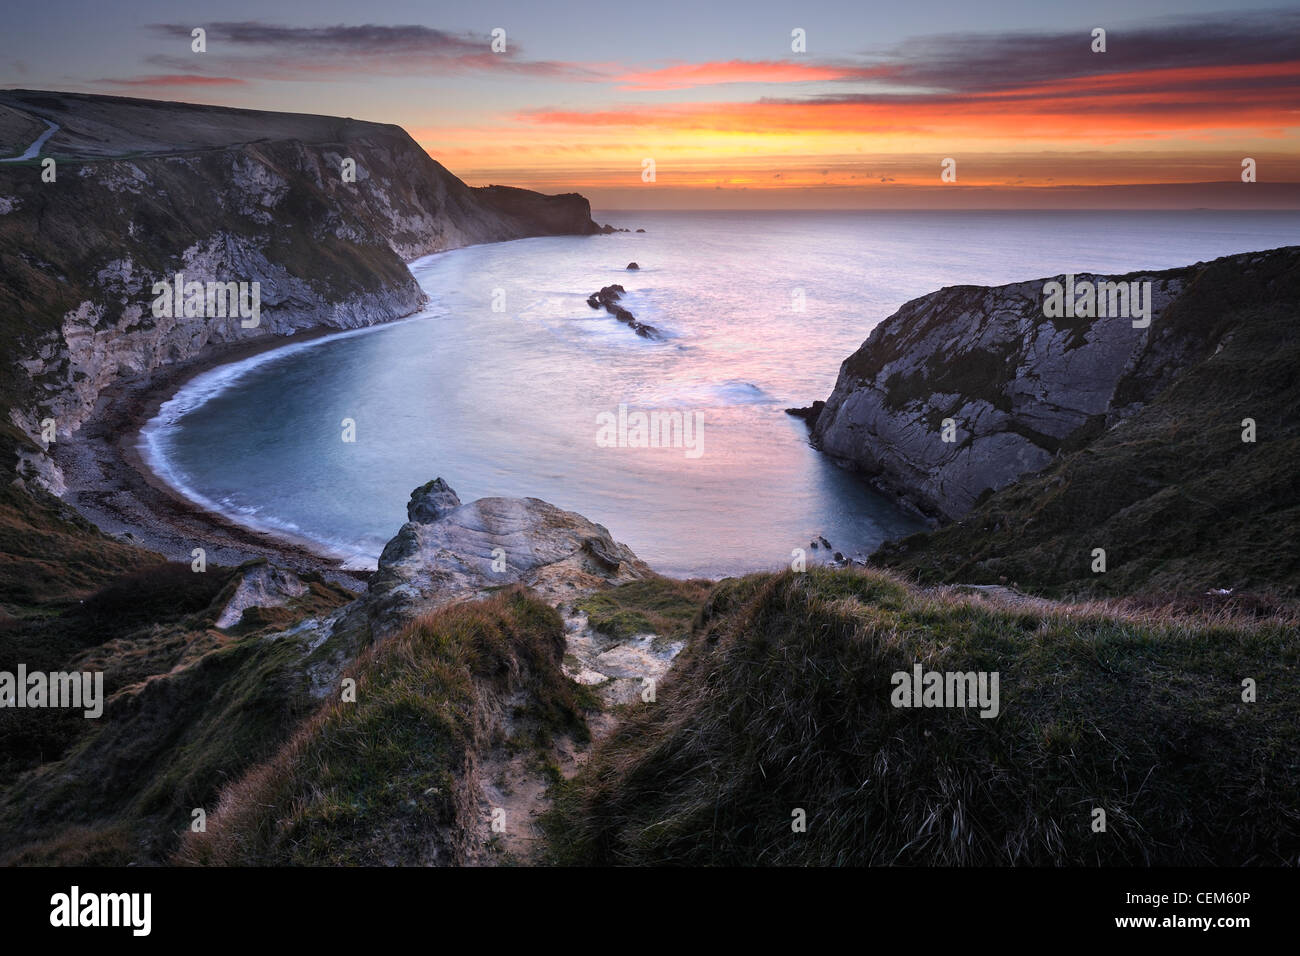 Man O' War Bay before sunrise on the Jurassic coast, Dorset, UK. Stock Photo